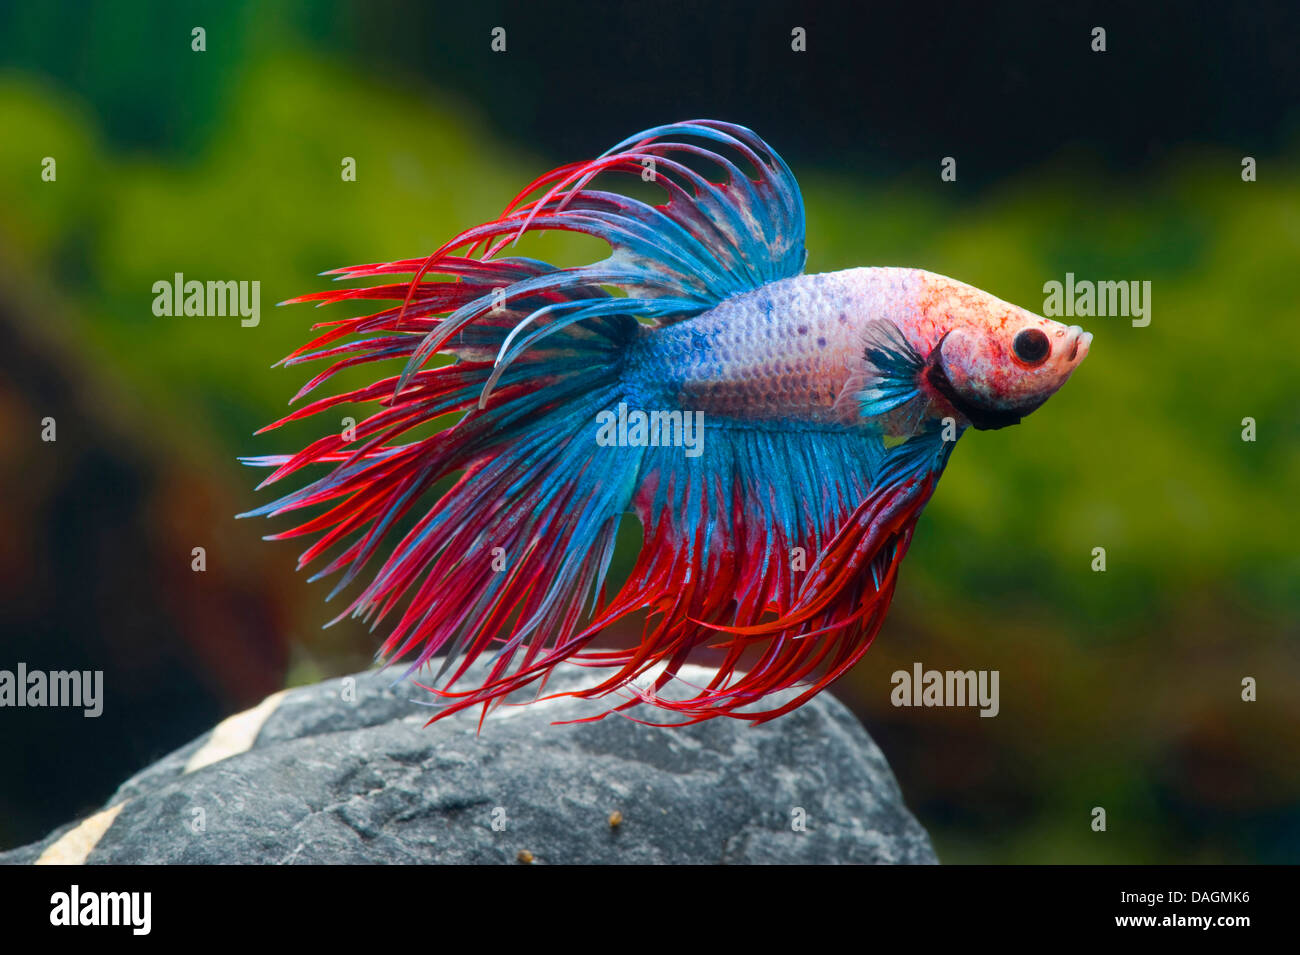 Betta fish aquarium hi-res stock photography and images - Alamy